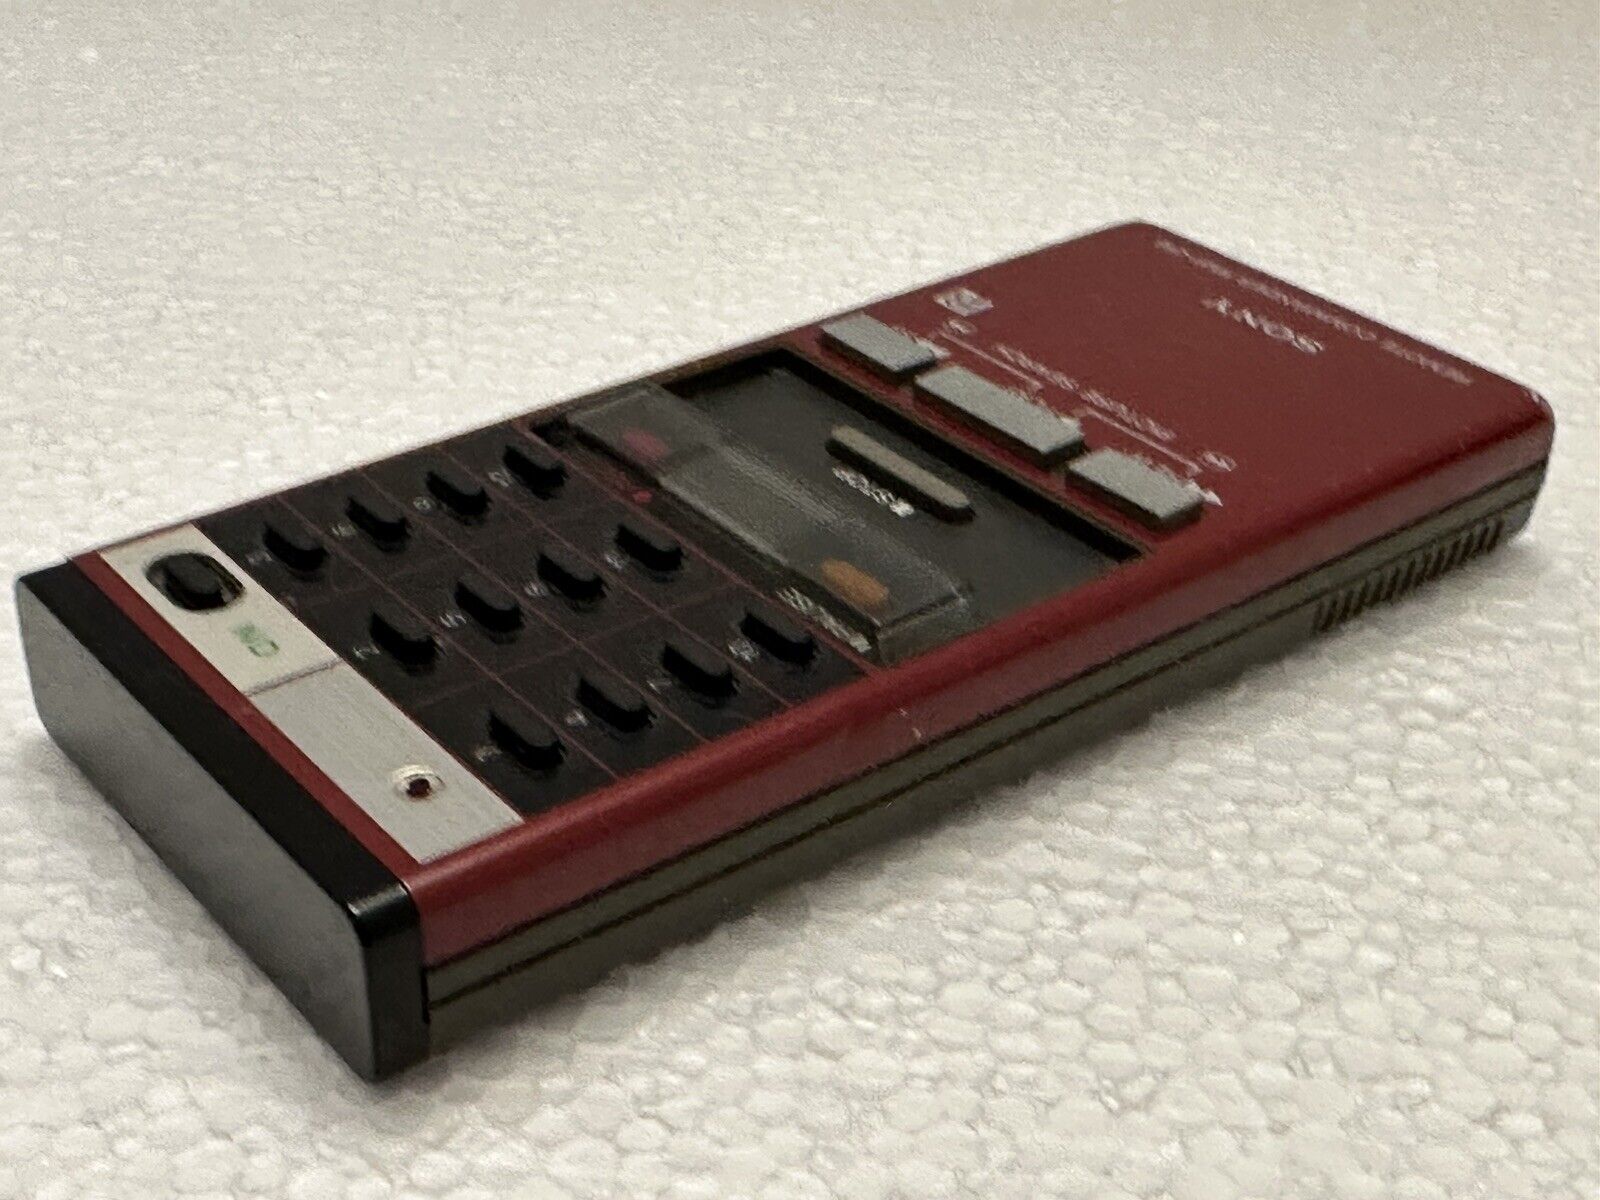 Sony RMT-216 Betamax Video Casette Recorder Remote Control